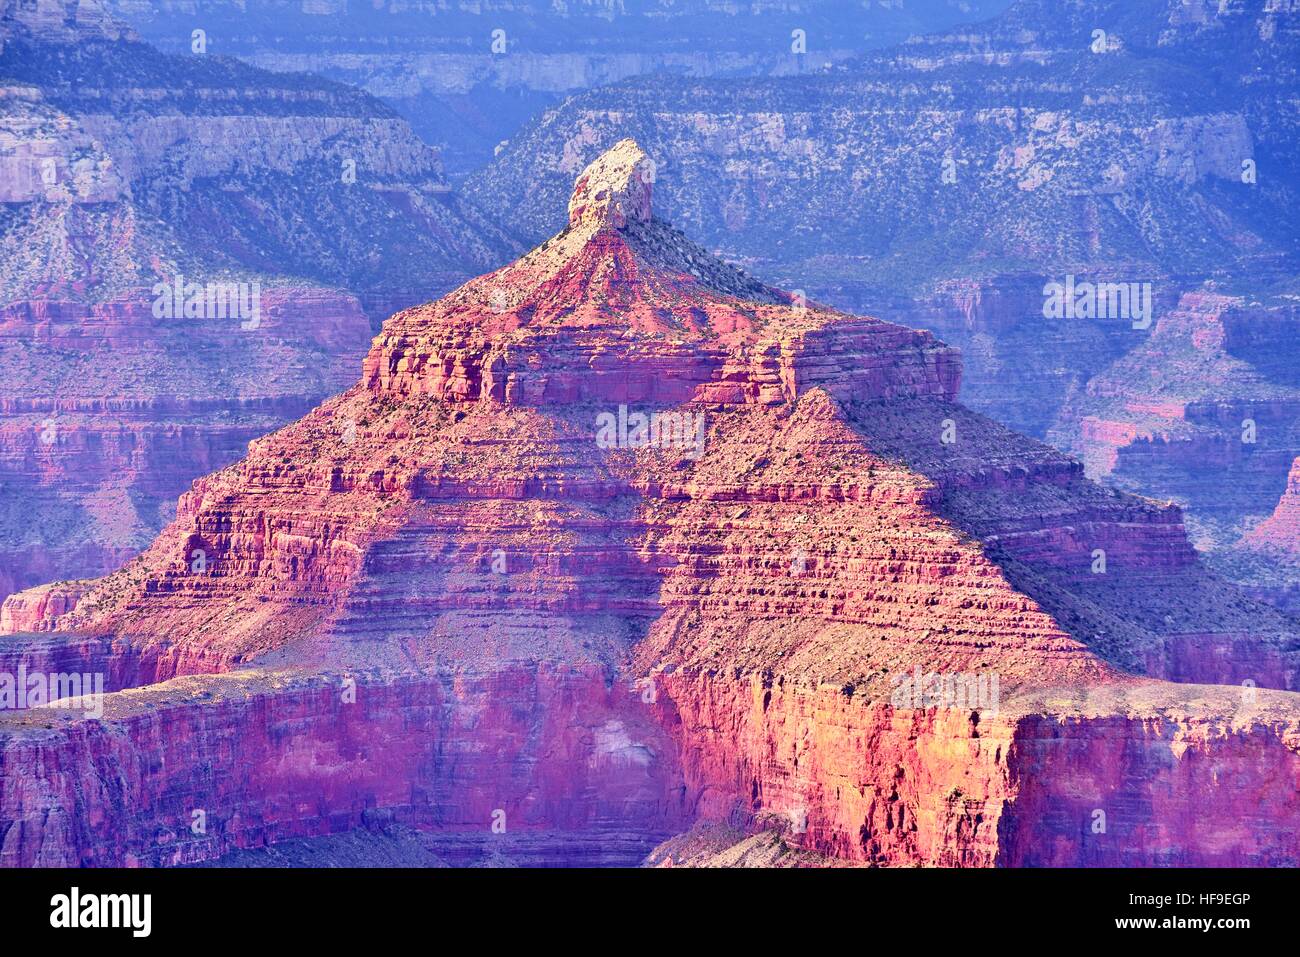 View of eroded rock formation Bright Angel, Colorado River Canyon, Grand Canyon National Park, South Rim, Arizona, USA Stock Photo